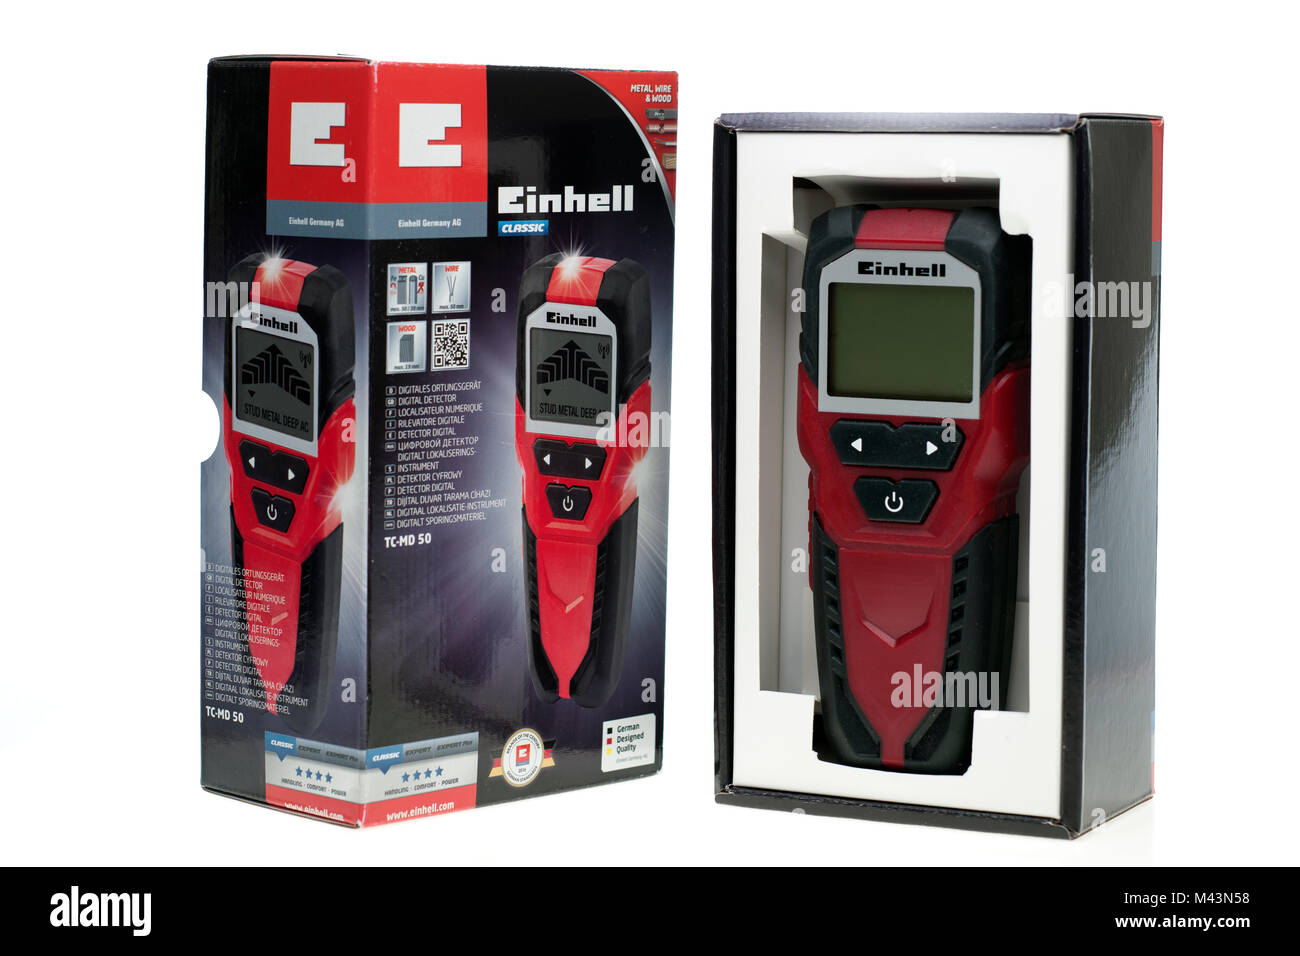 Einhell TC-MD 50 Digital Multi Detector for Walls Stock Photo